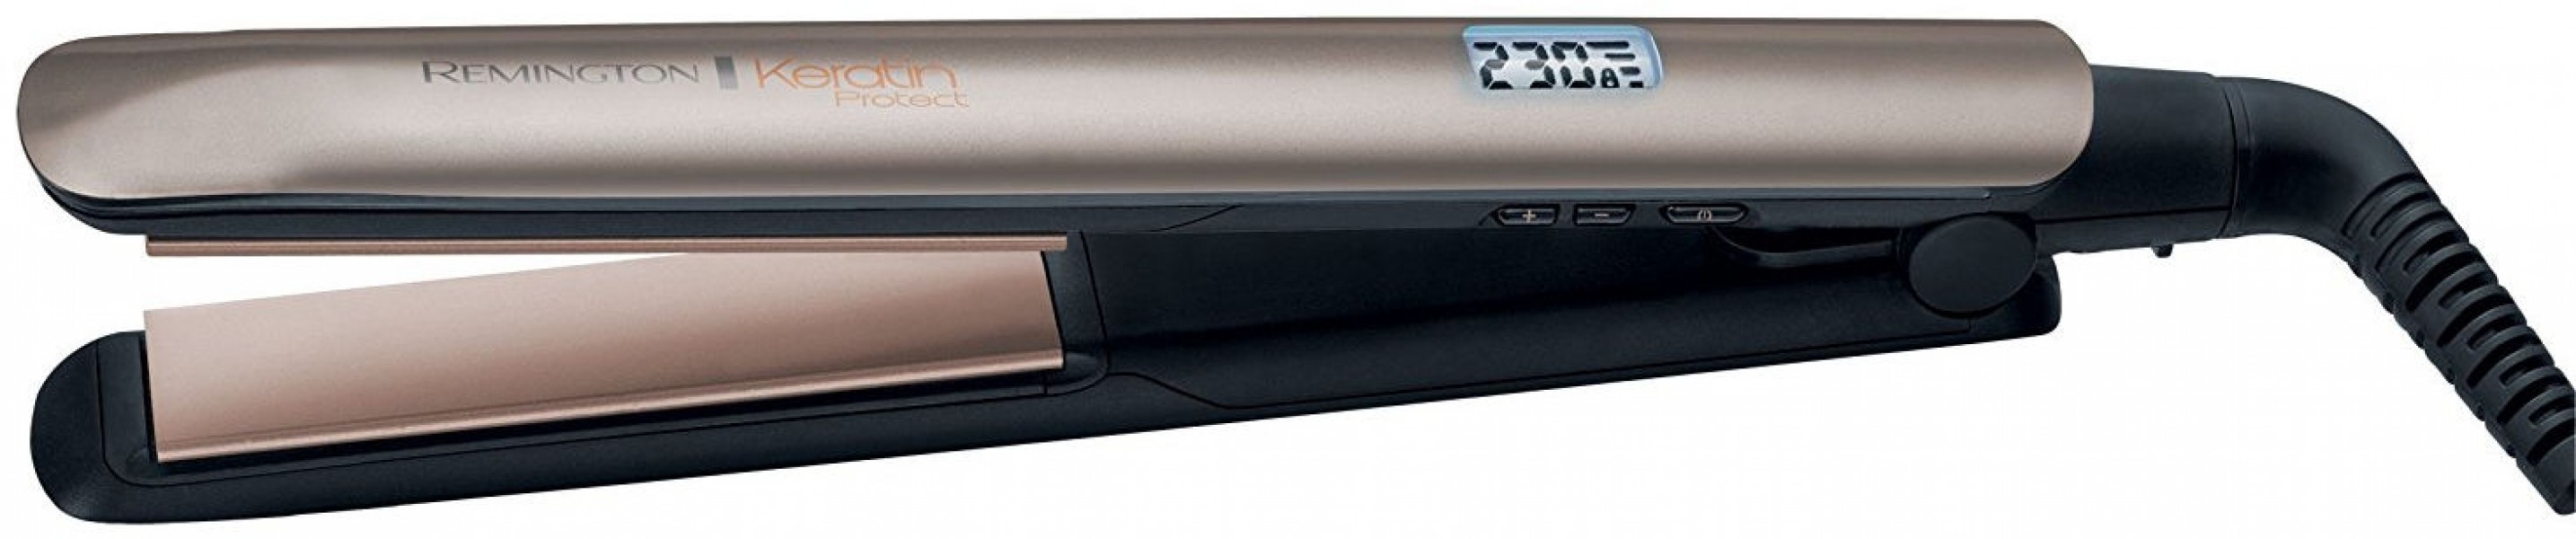 Remington Keratin Protec S8540